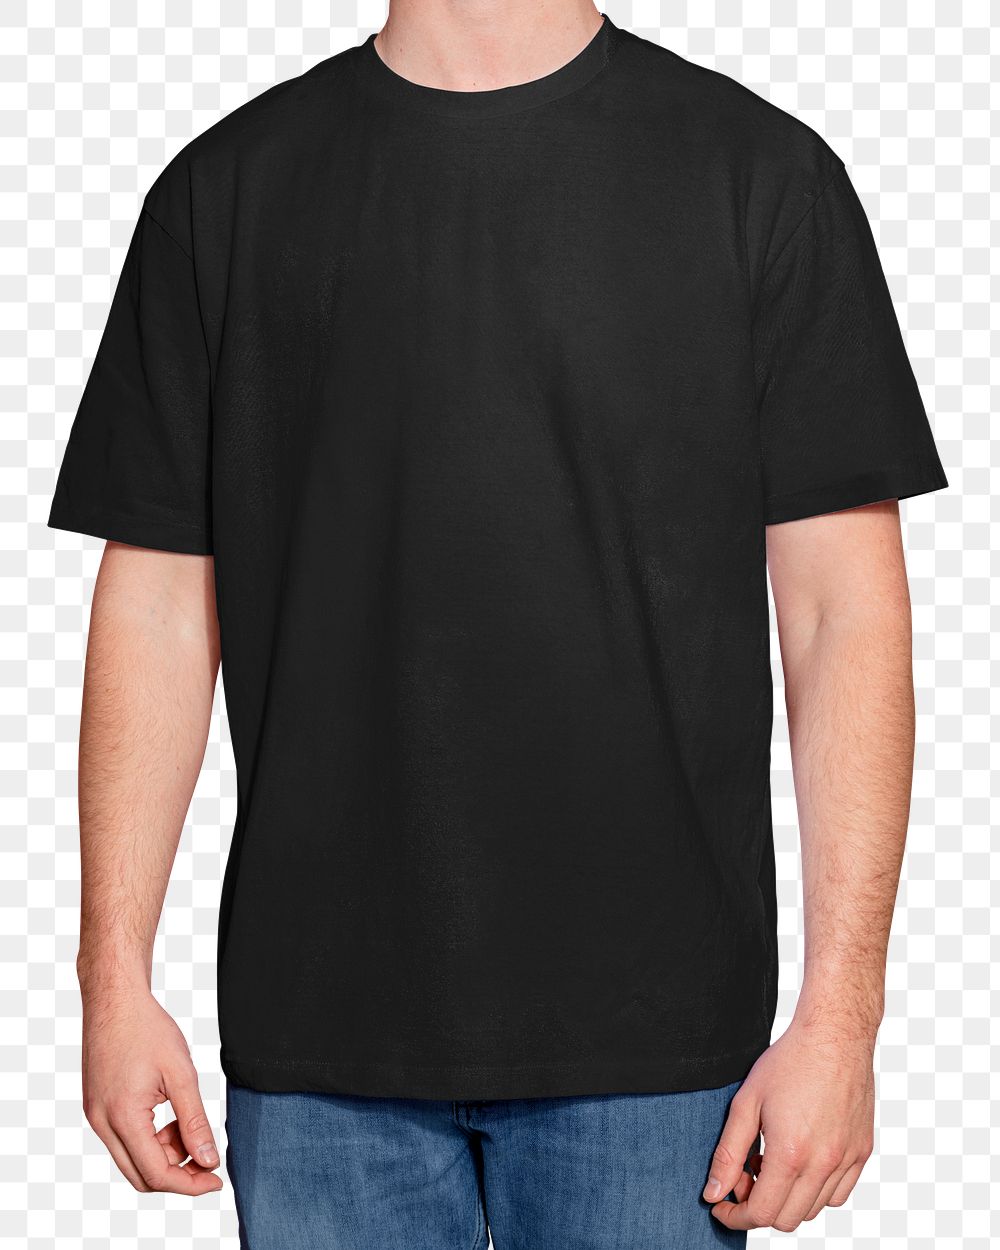 Black tshirt png sticker, transparent background